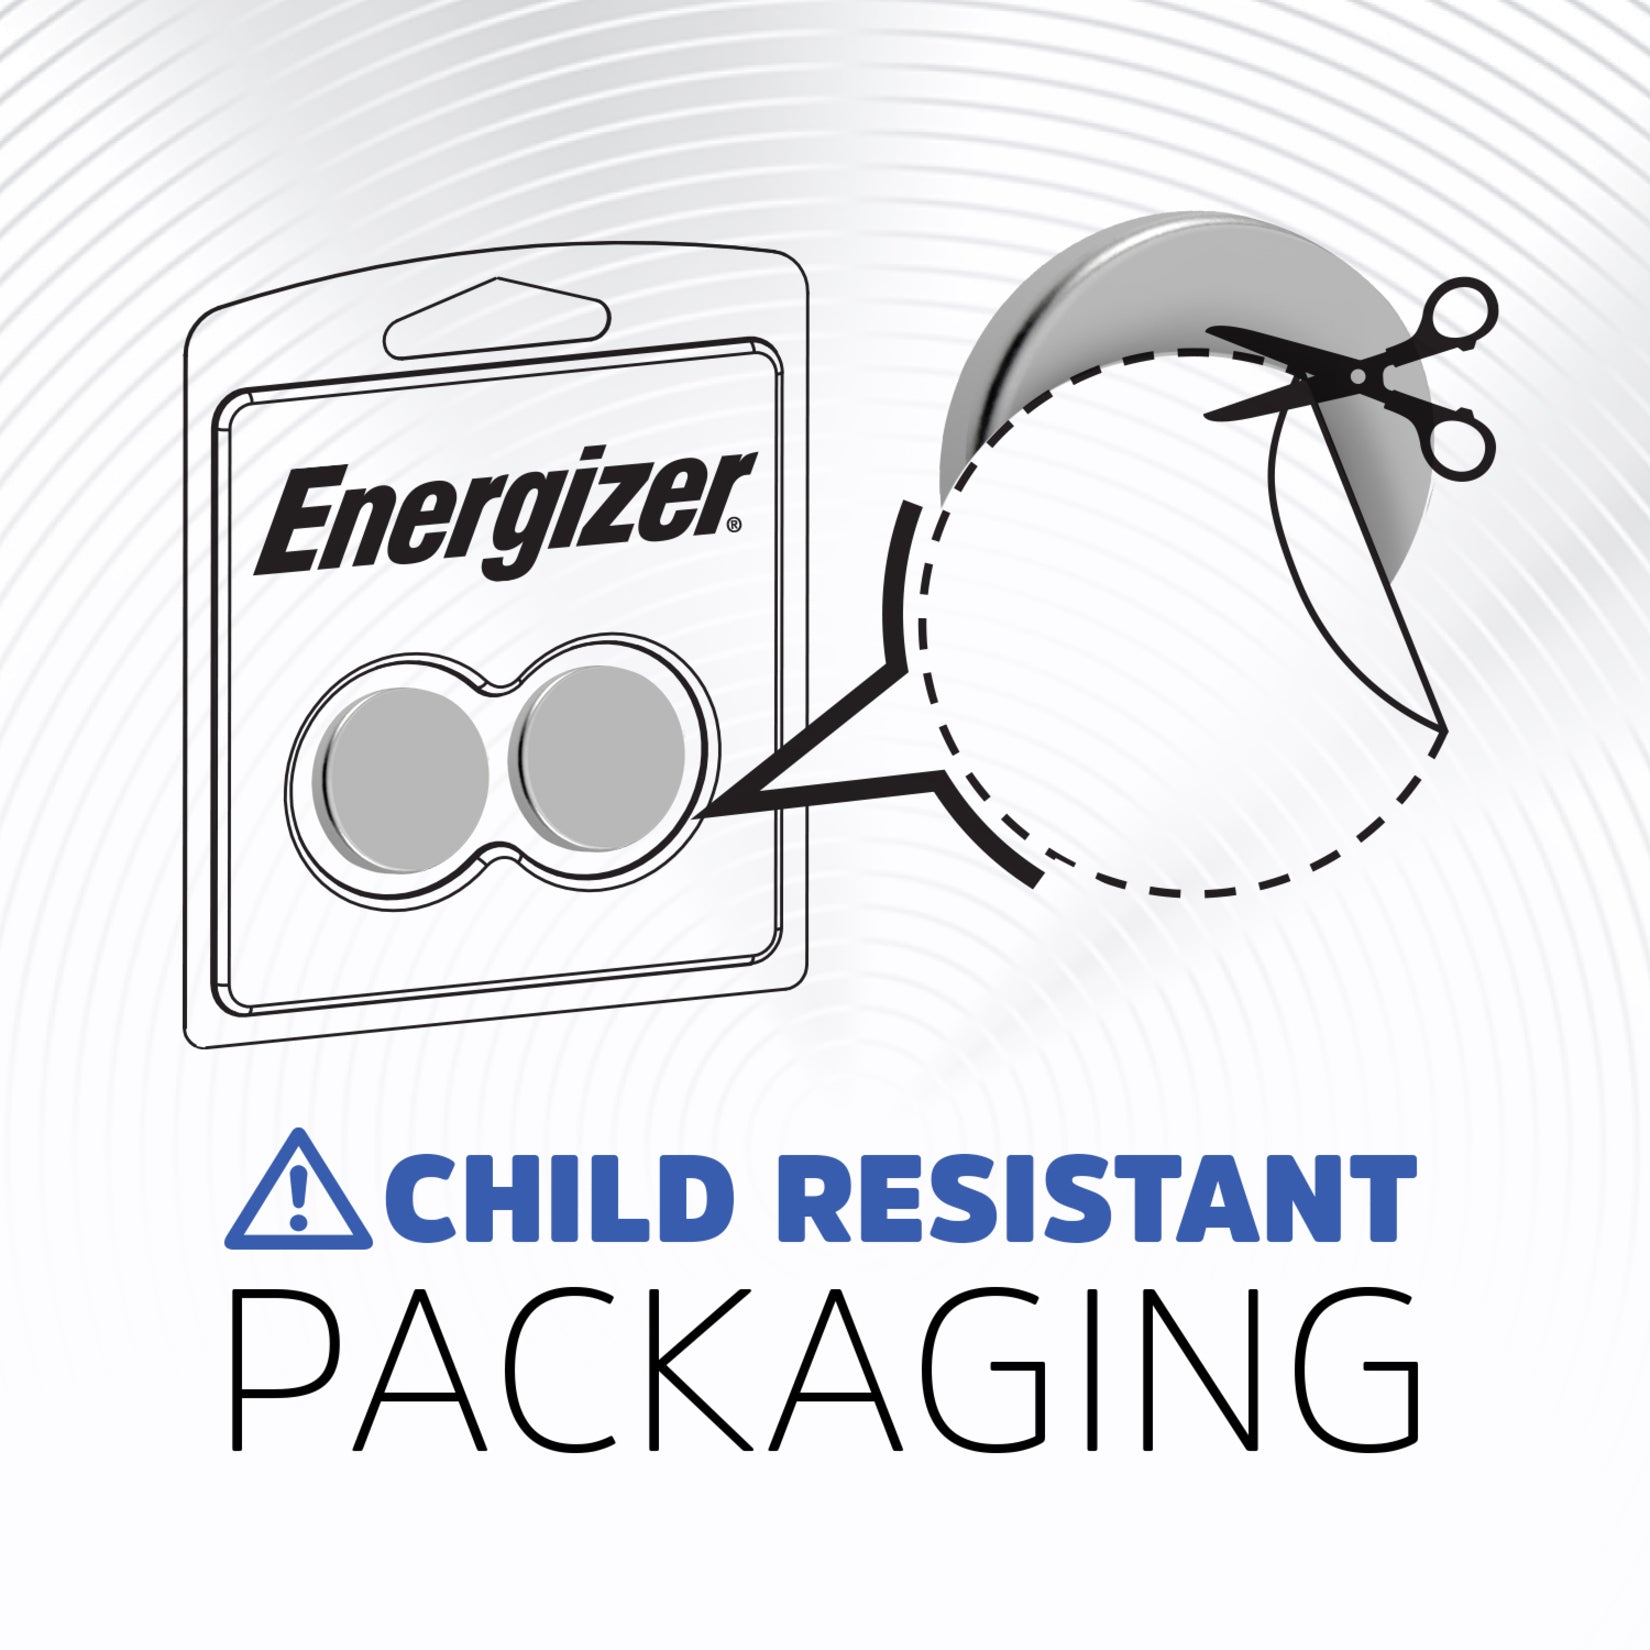 Energizer ECR-1220BP Lithium Button Cell Battery, 1 Pack - 3V DC